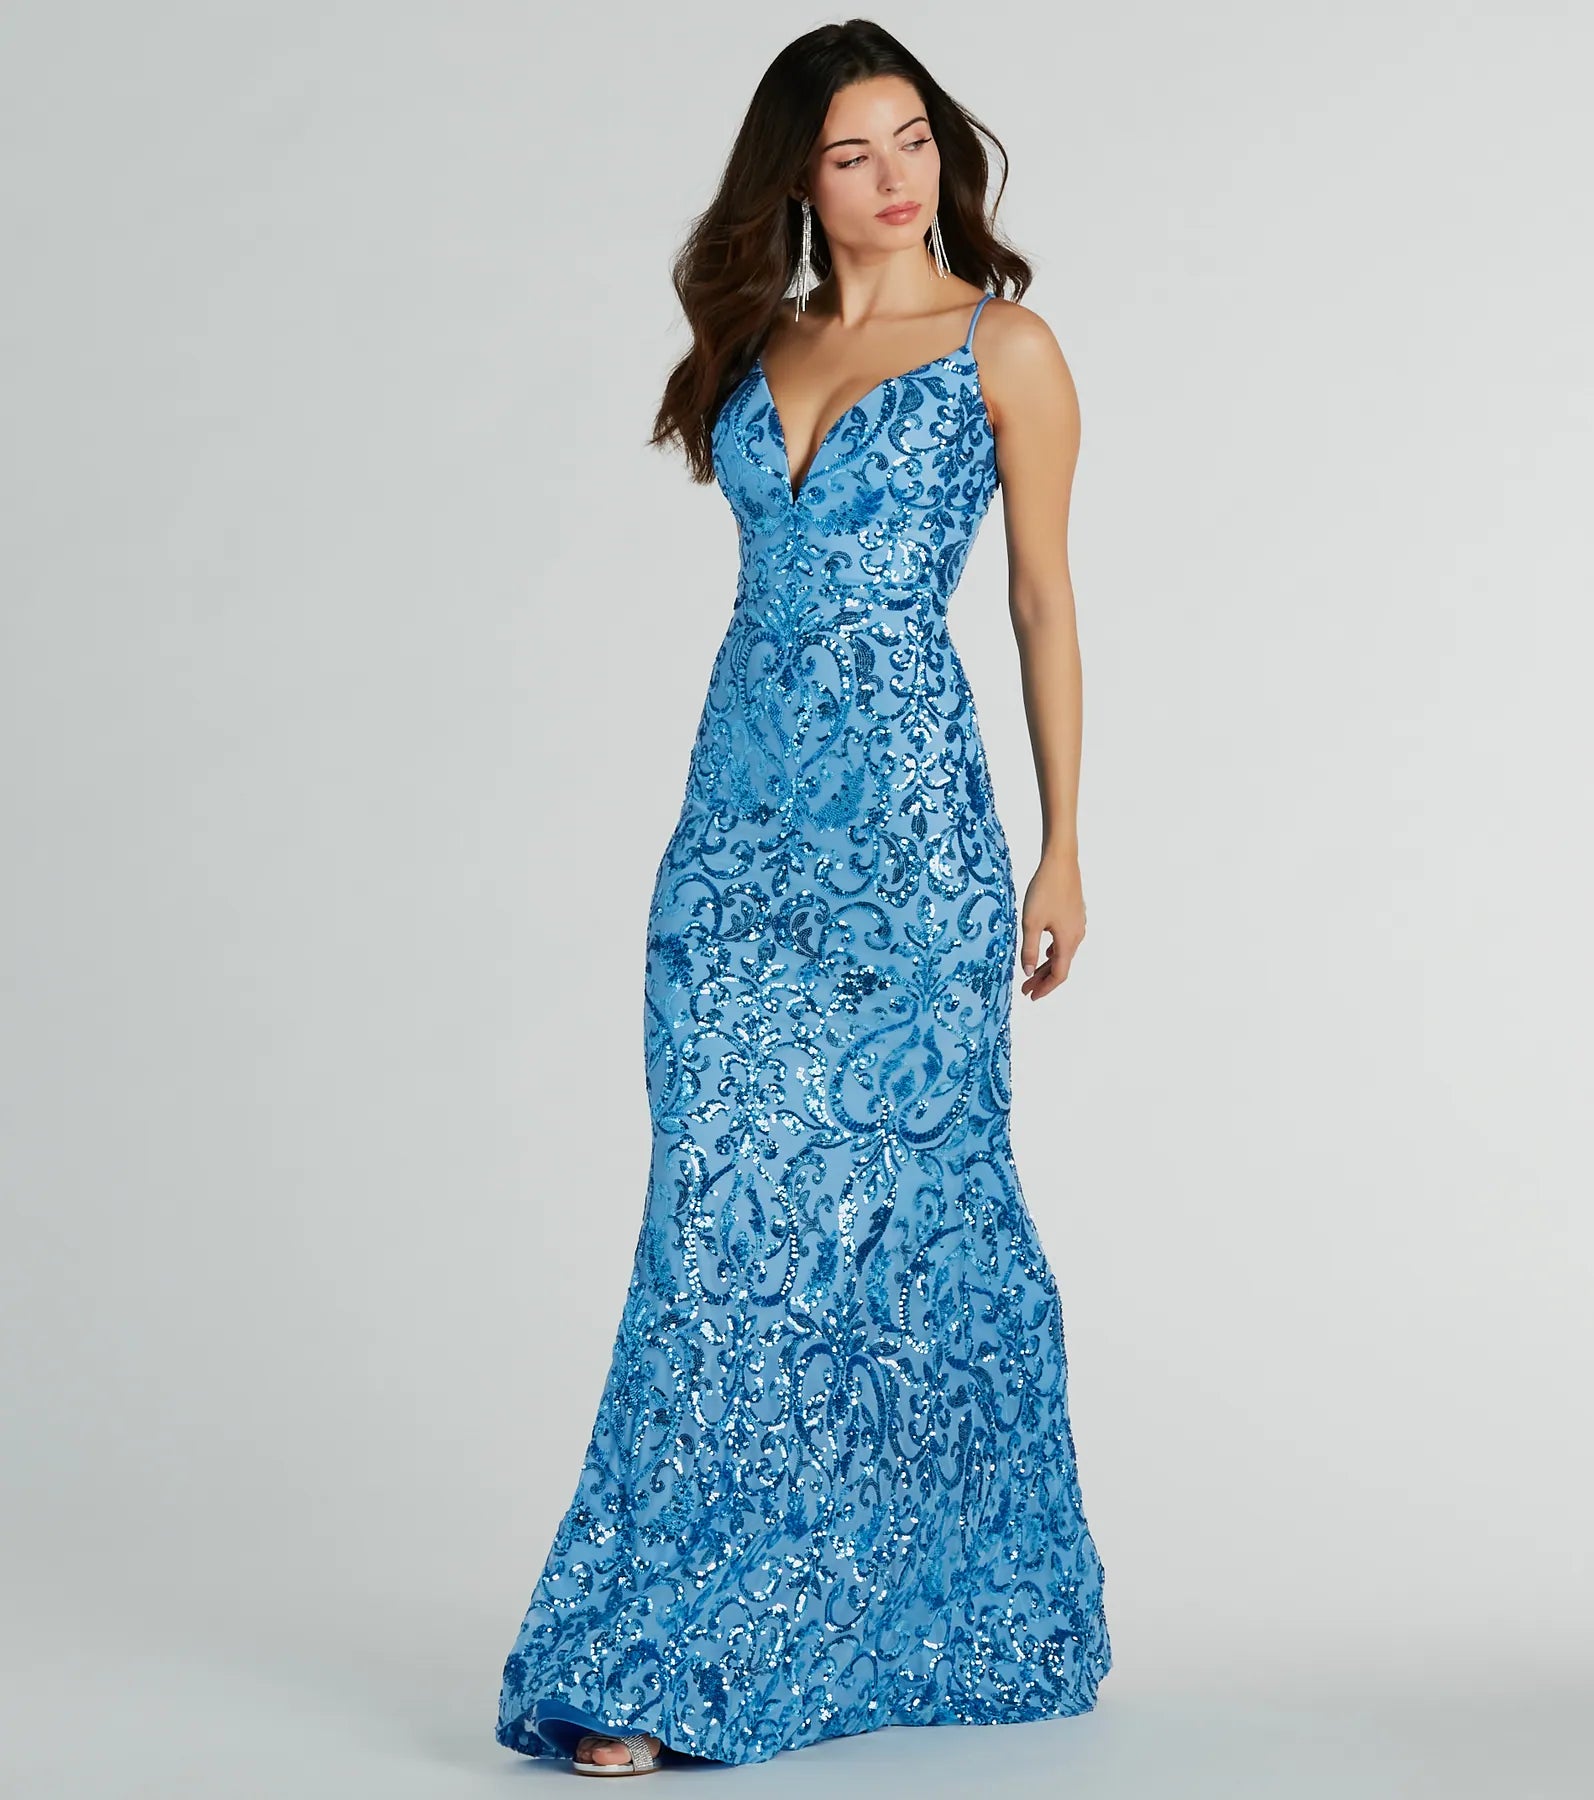 V-neck Mesh Stretchy Sequined General Print Knit Sleeveless Spaghetti Strap Mermaid Floor Length Prom Dress